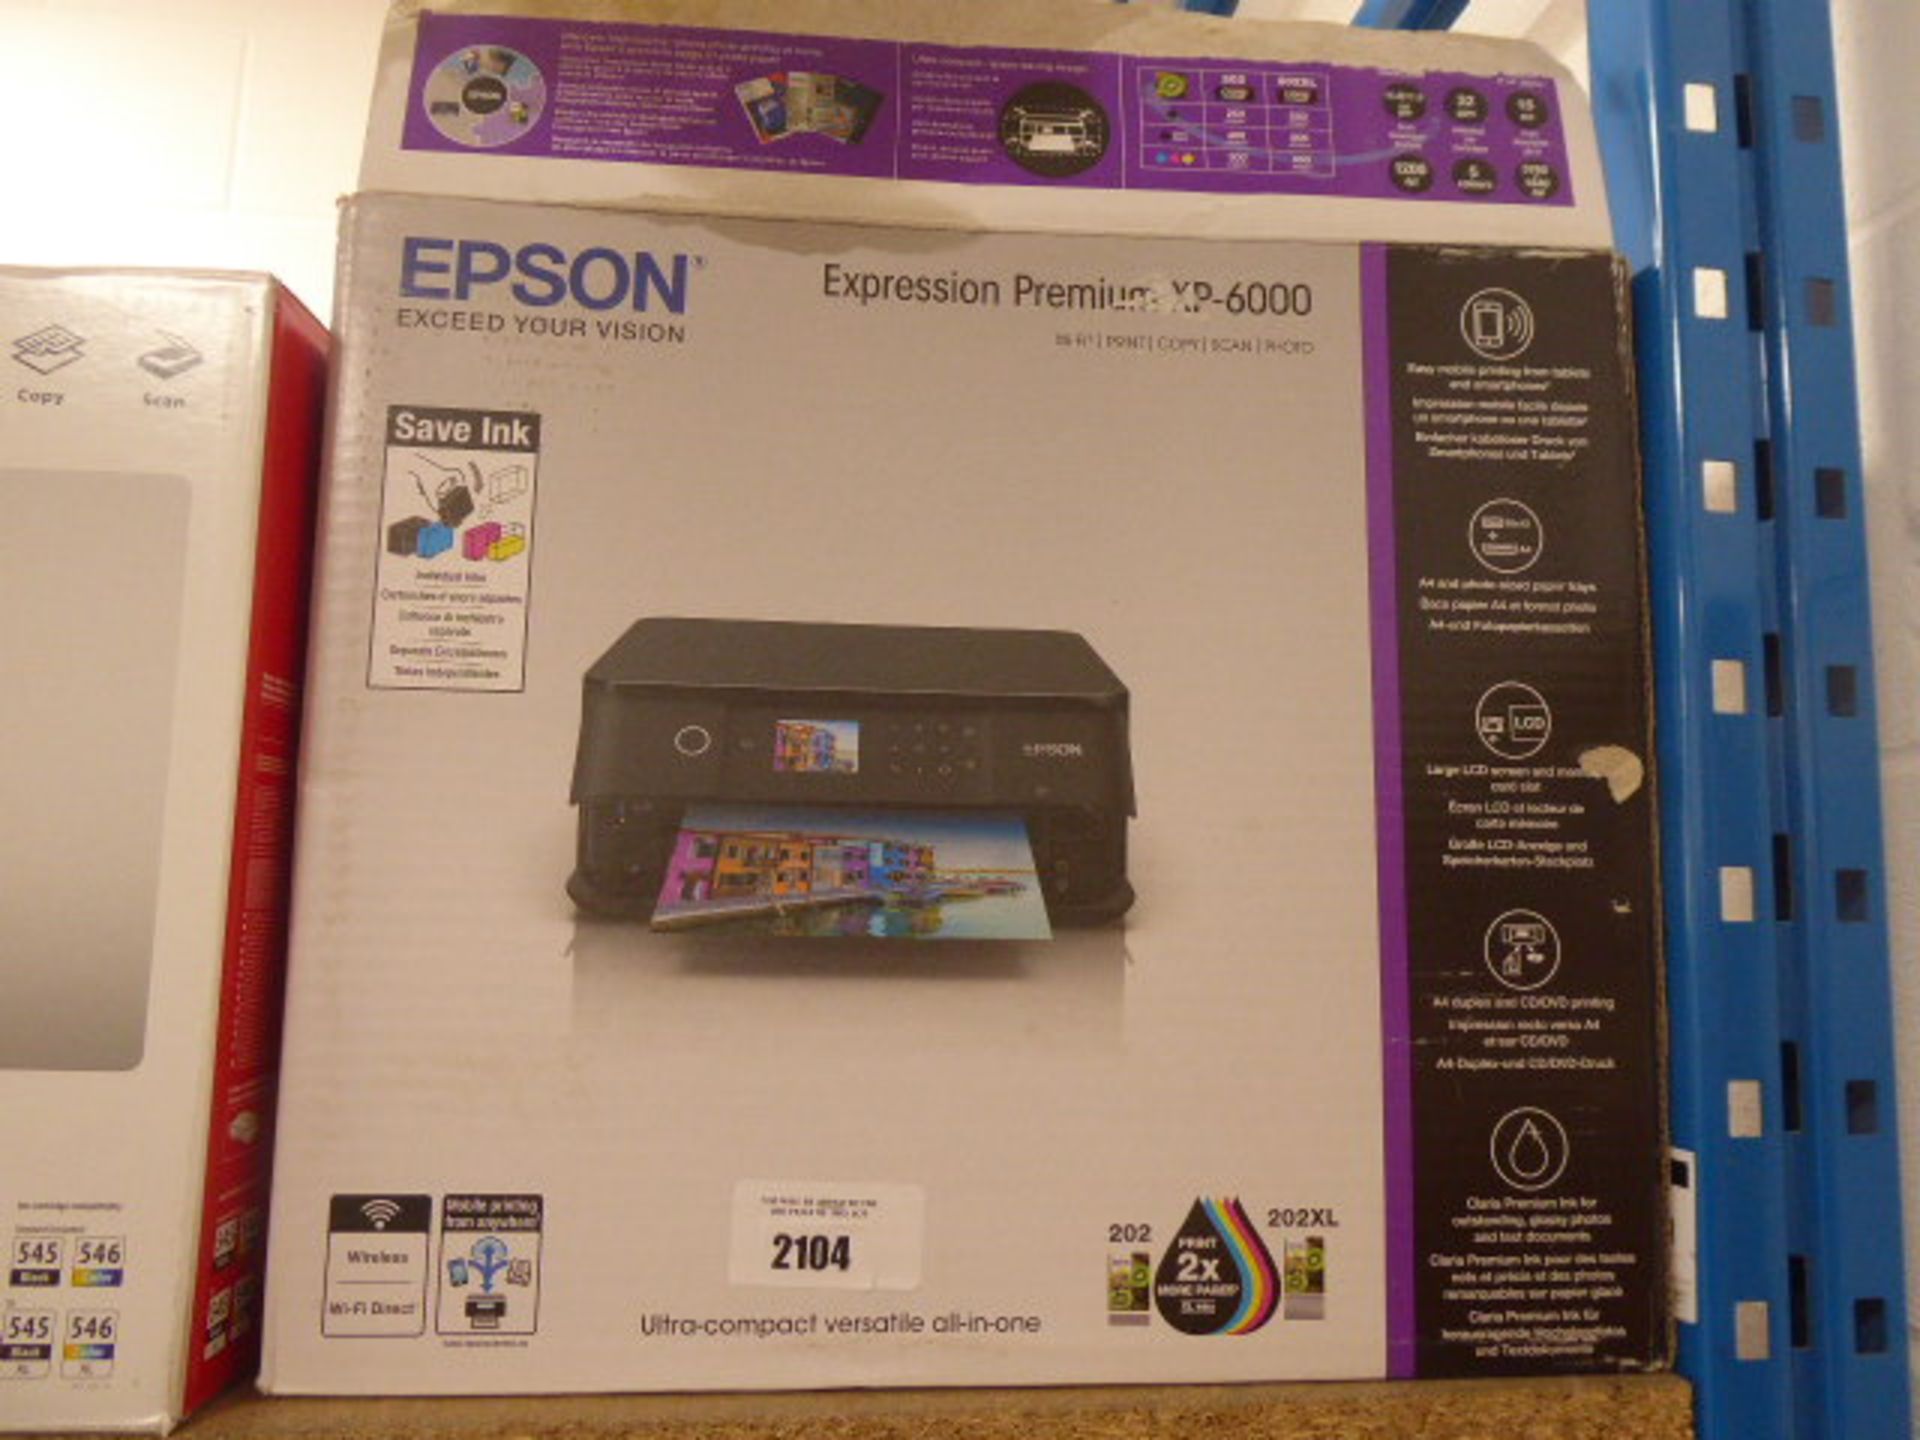 Epson Expression Premium XP6000 printer in box